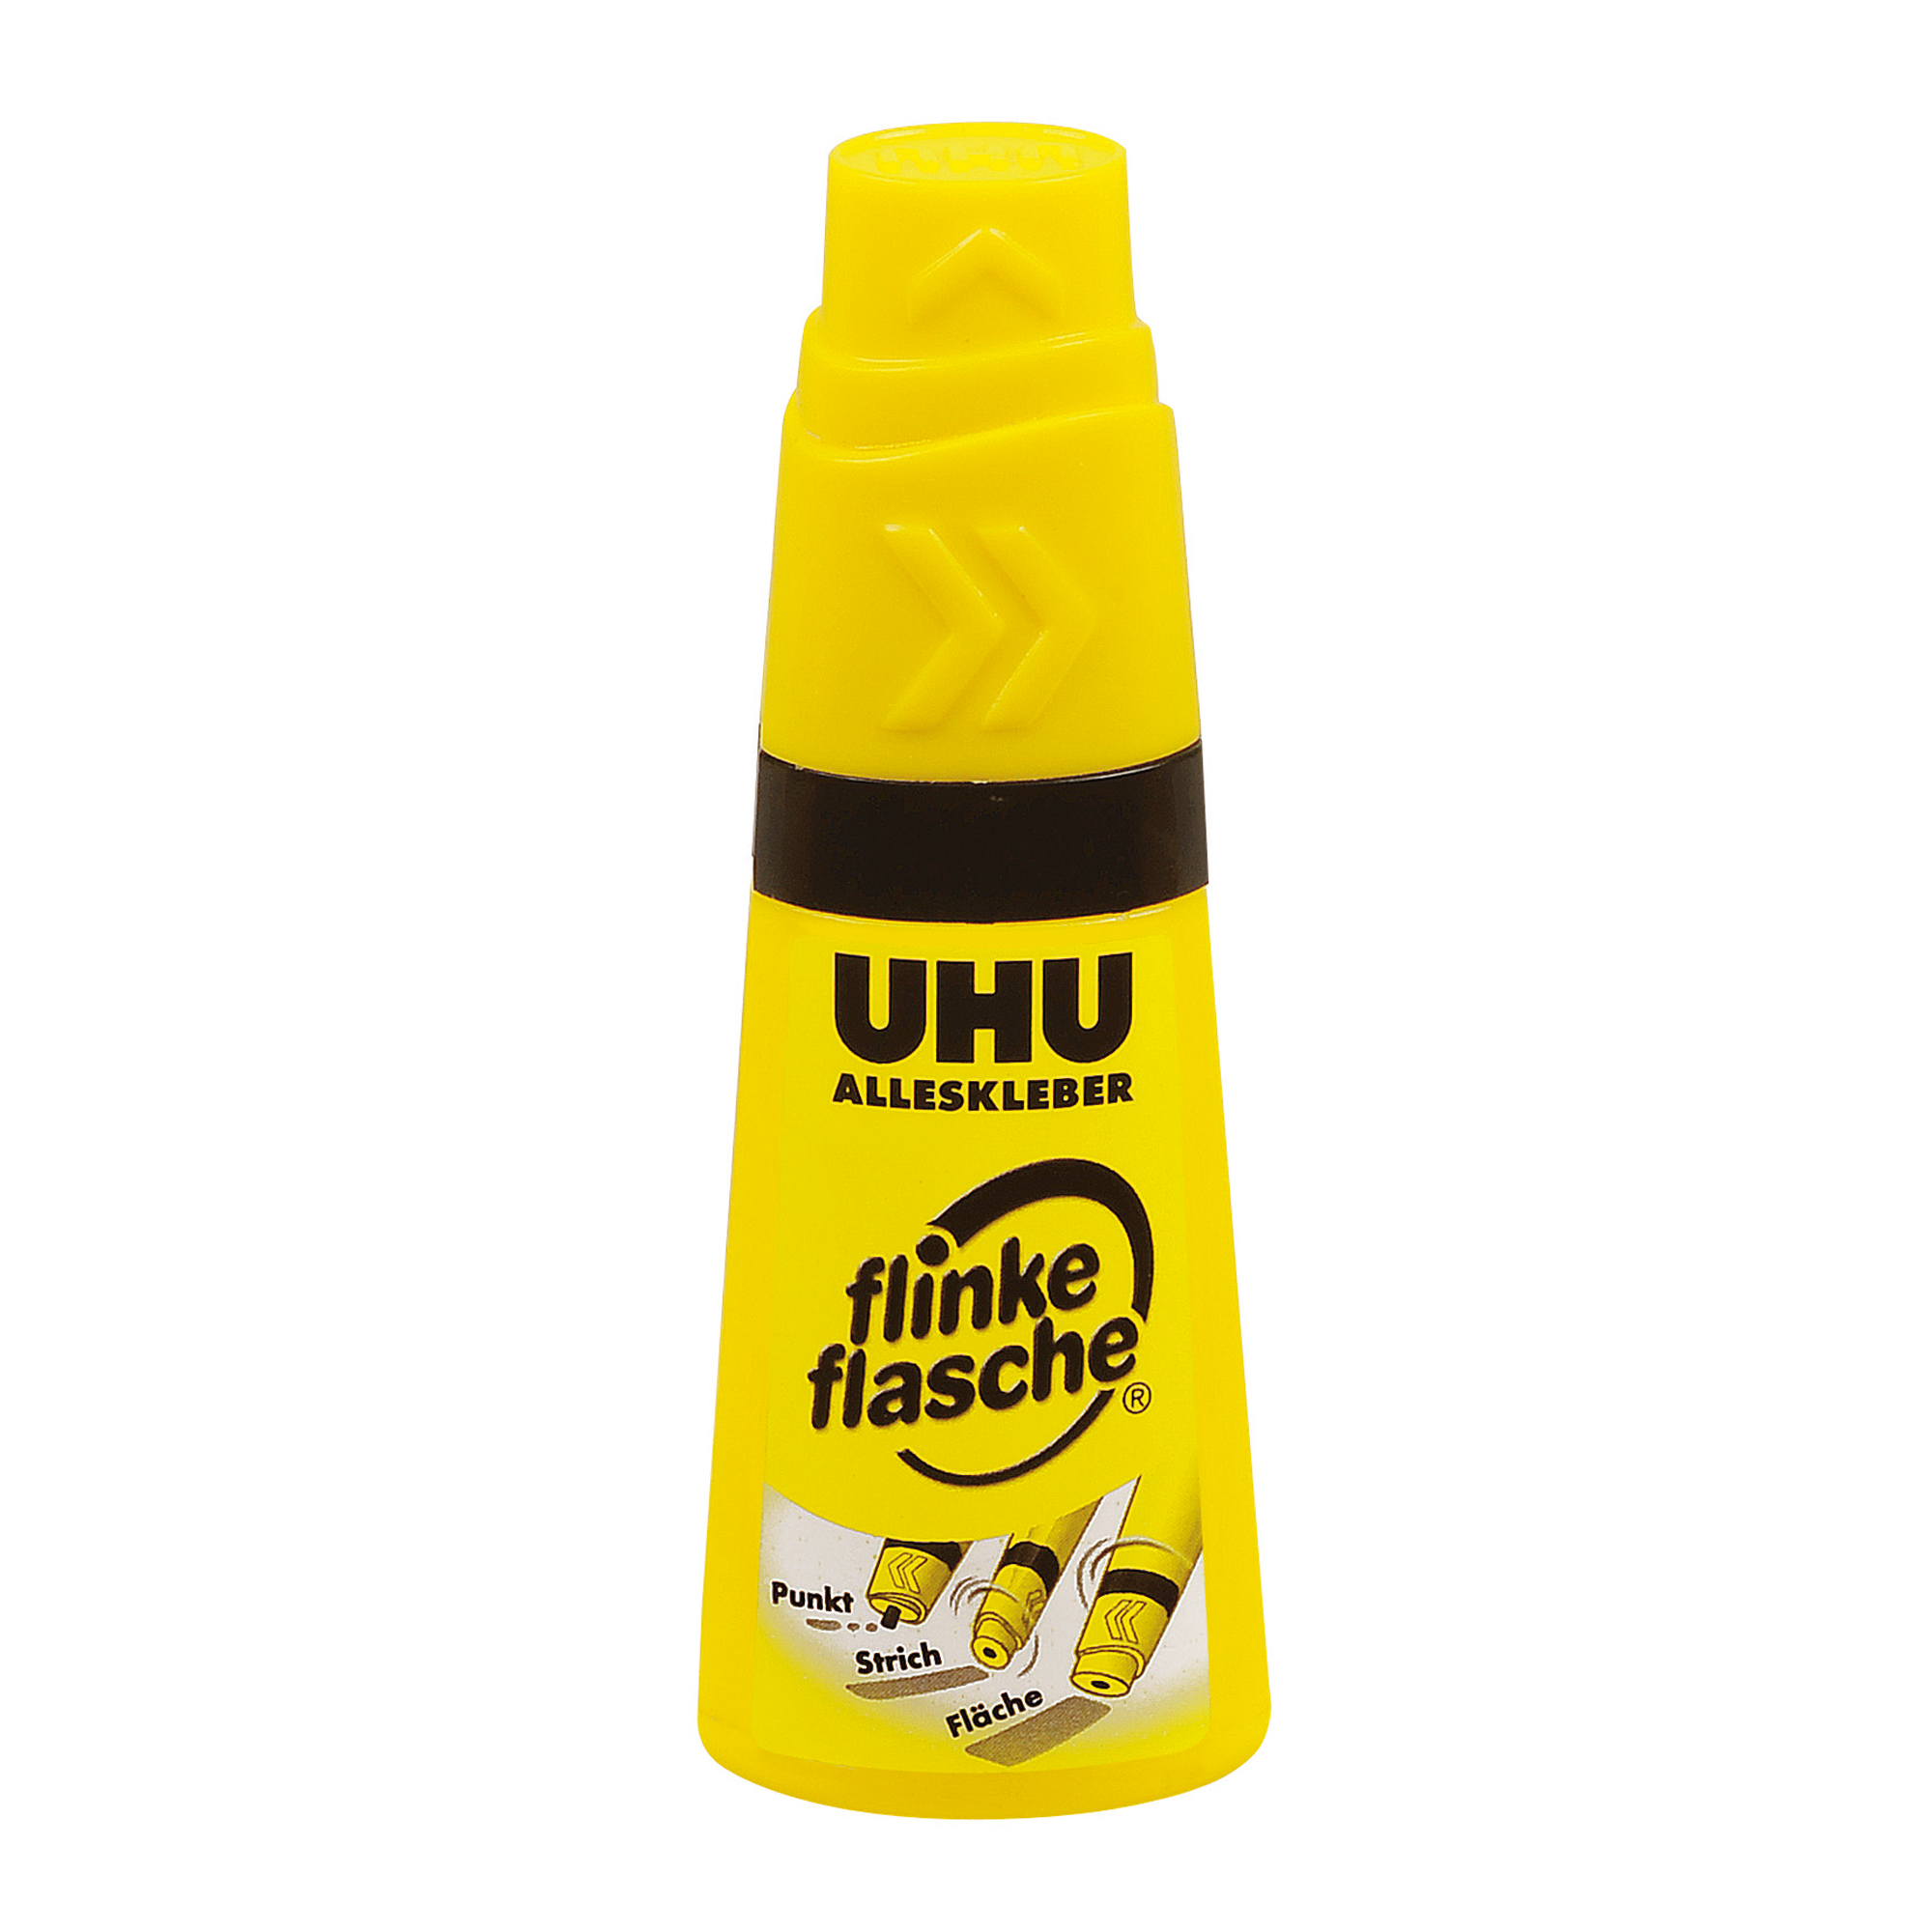 UHU® Alleskleber flinke flasche 35 g